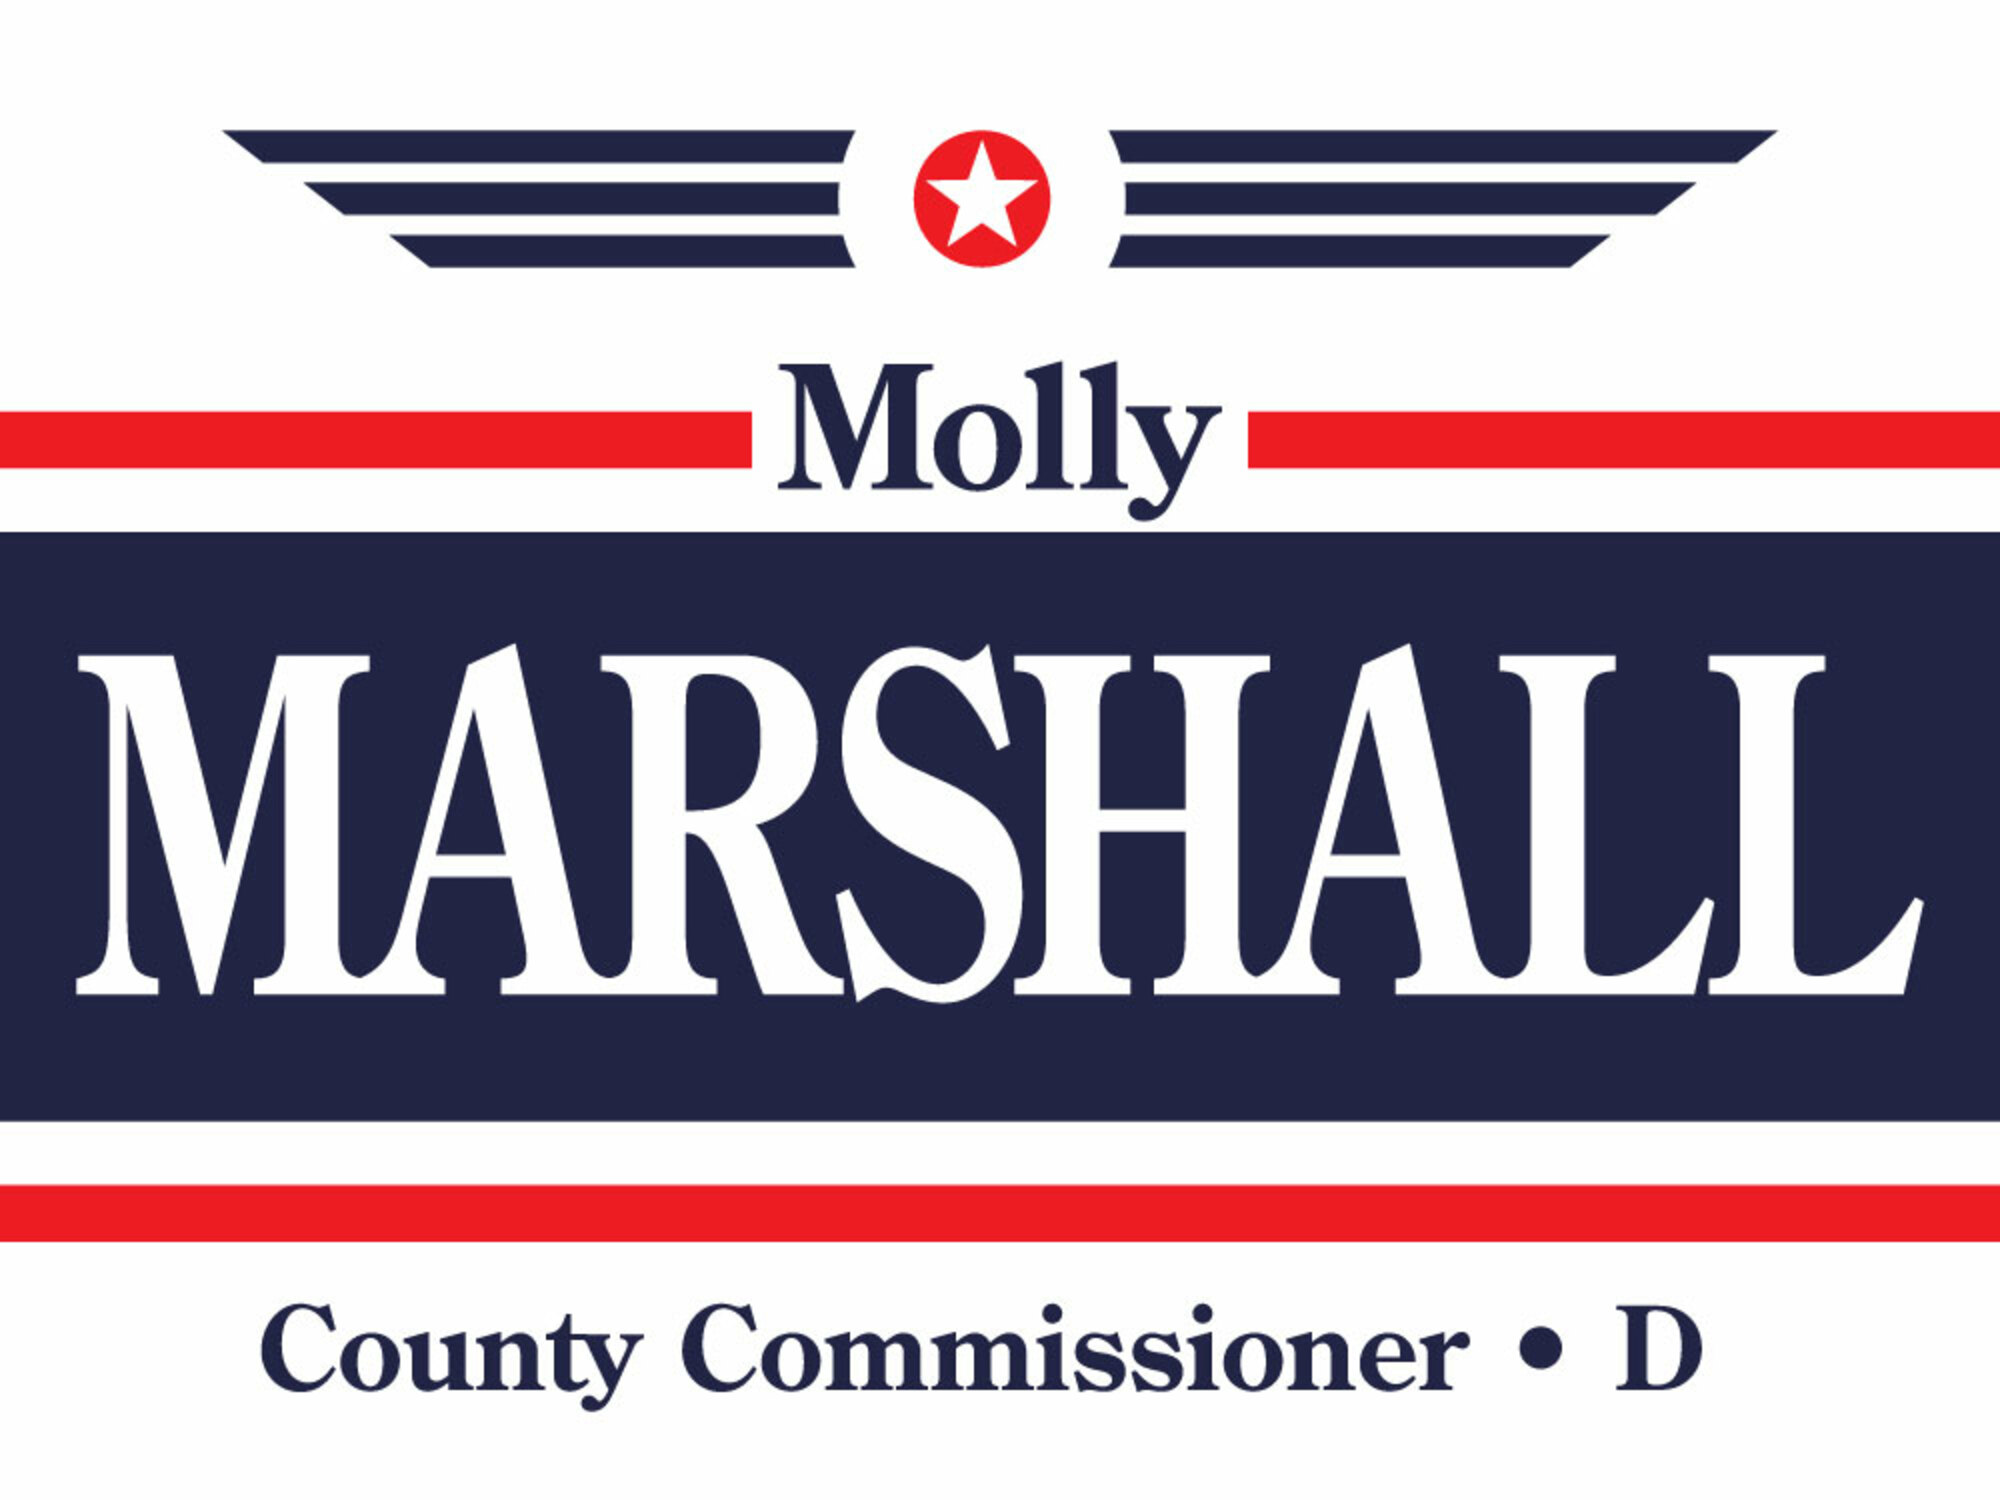 Vote Molly Marshall